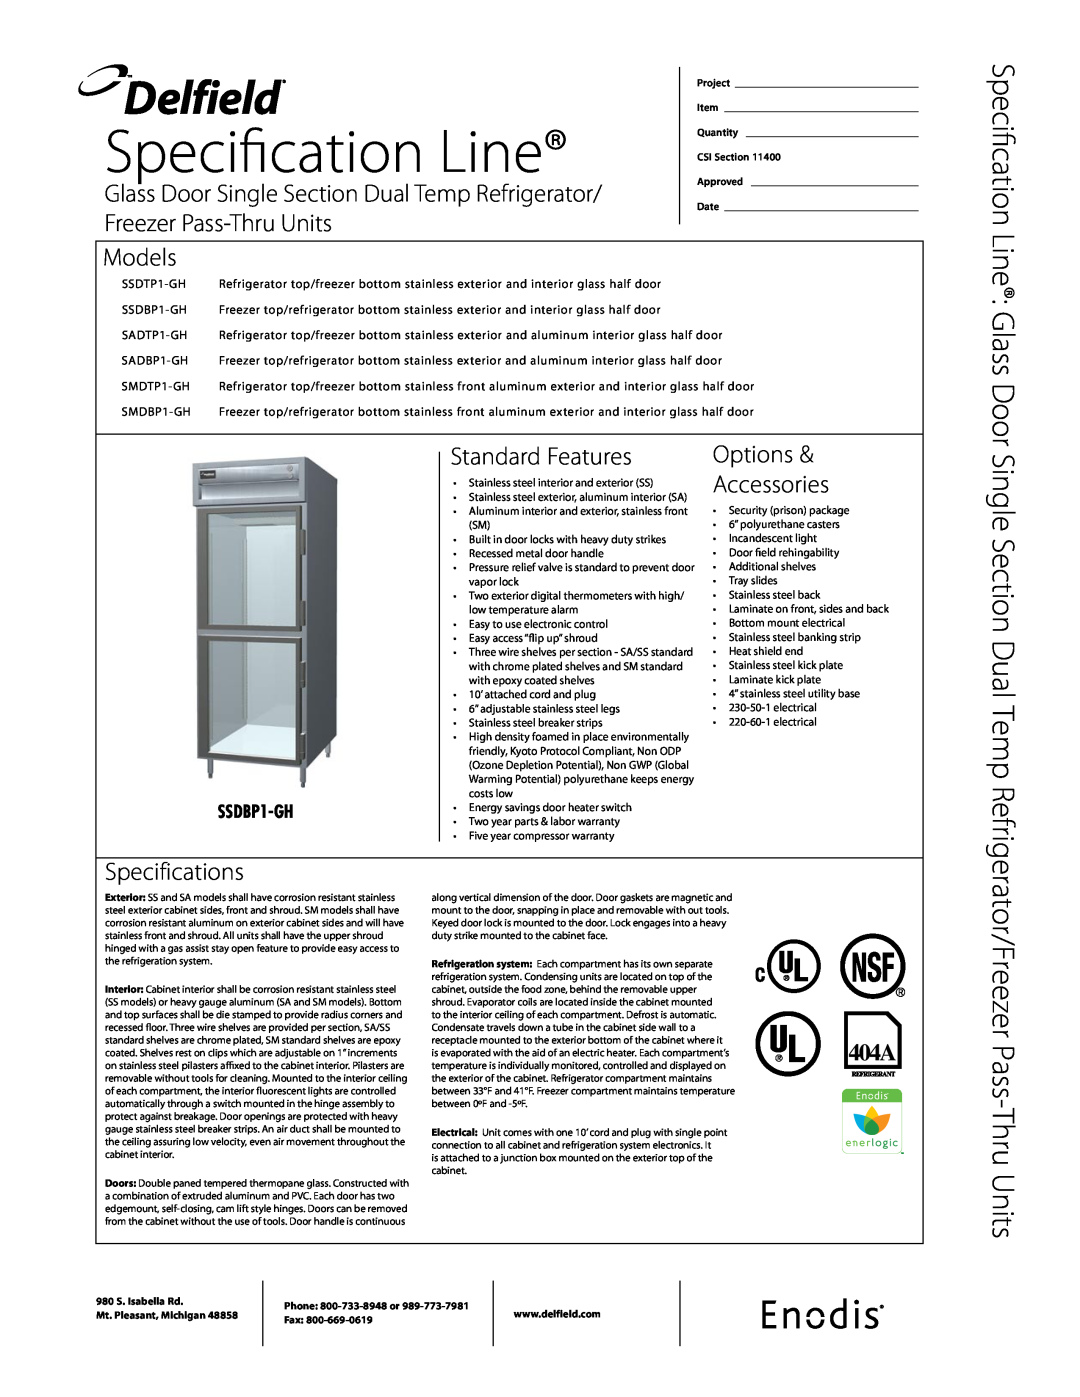 Delfield SSDP1-GH specifications Specification Line, Delfield, Glass Door Single Section Dual Temp Refrigerator, Models 